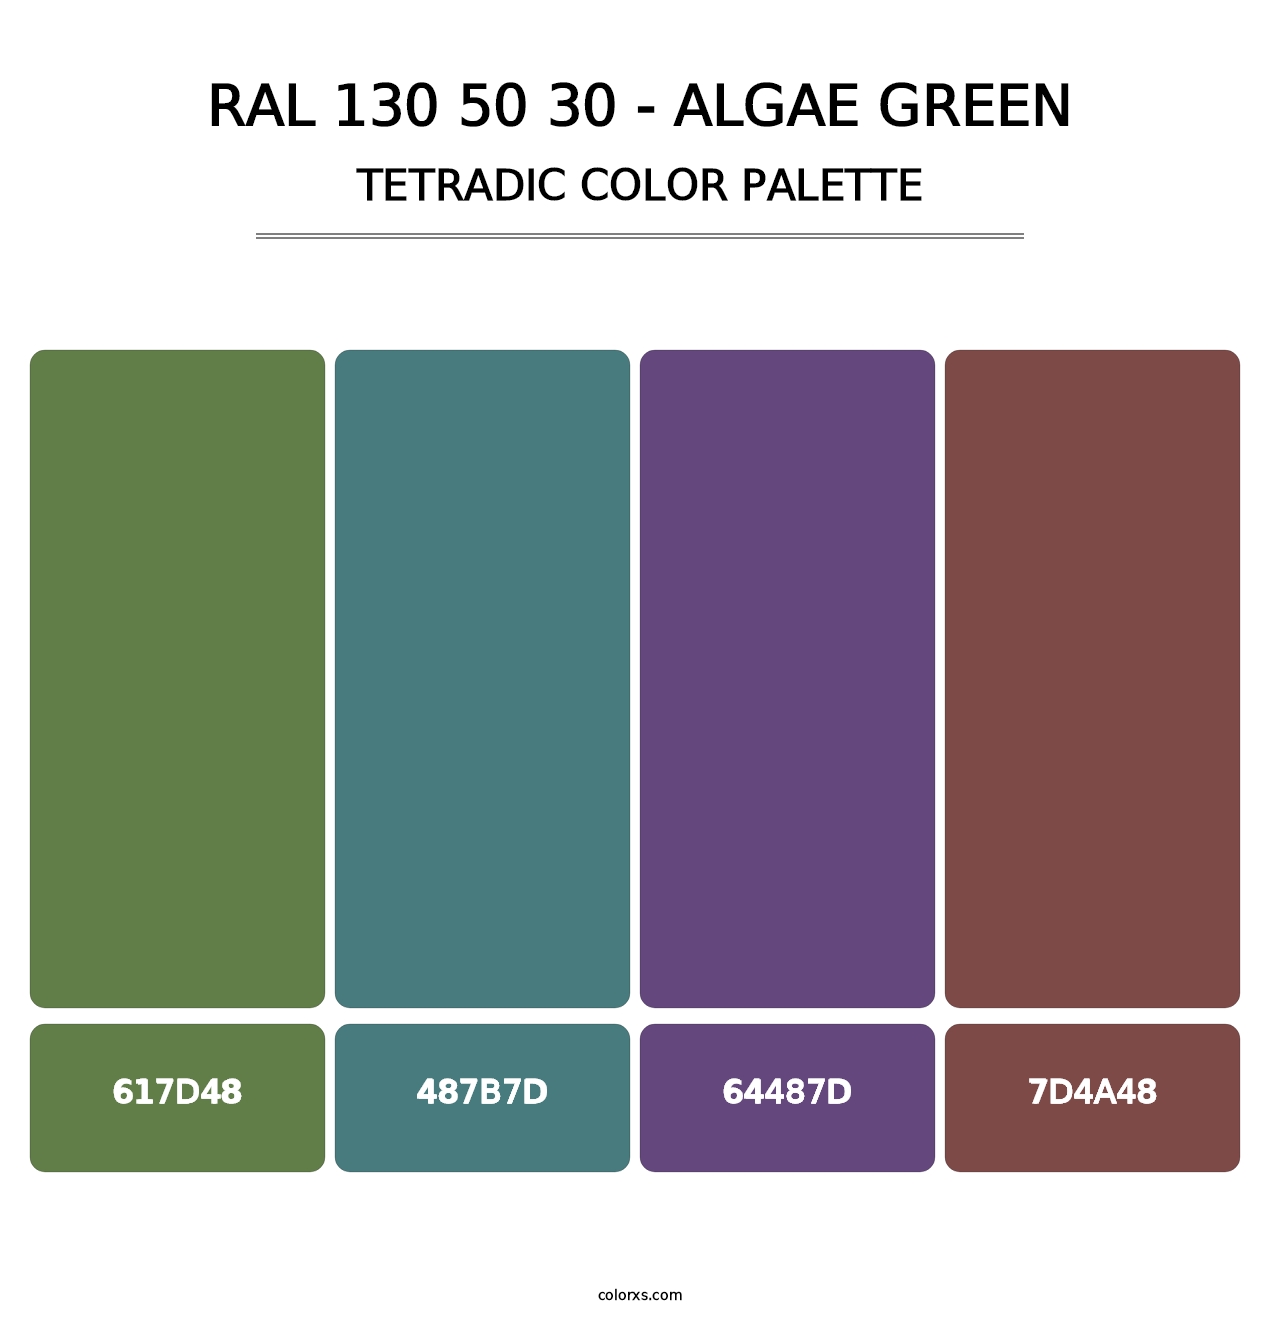 RAL 130 50 30 - Algae Green - Tetradic Color Palette